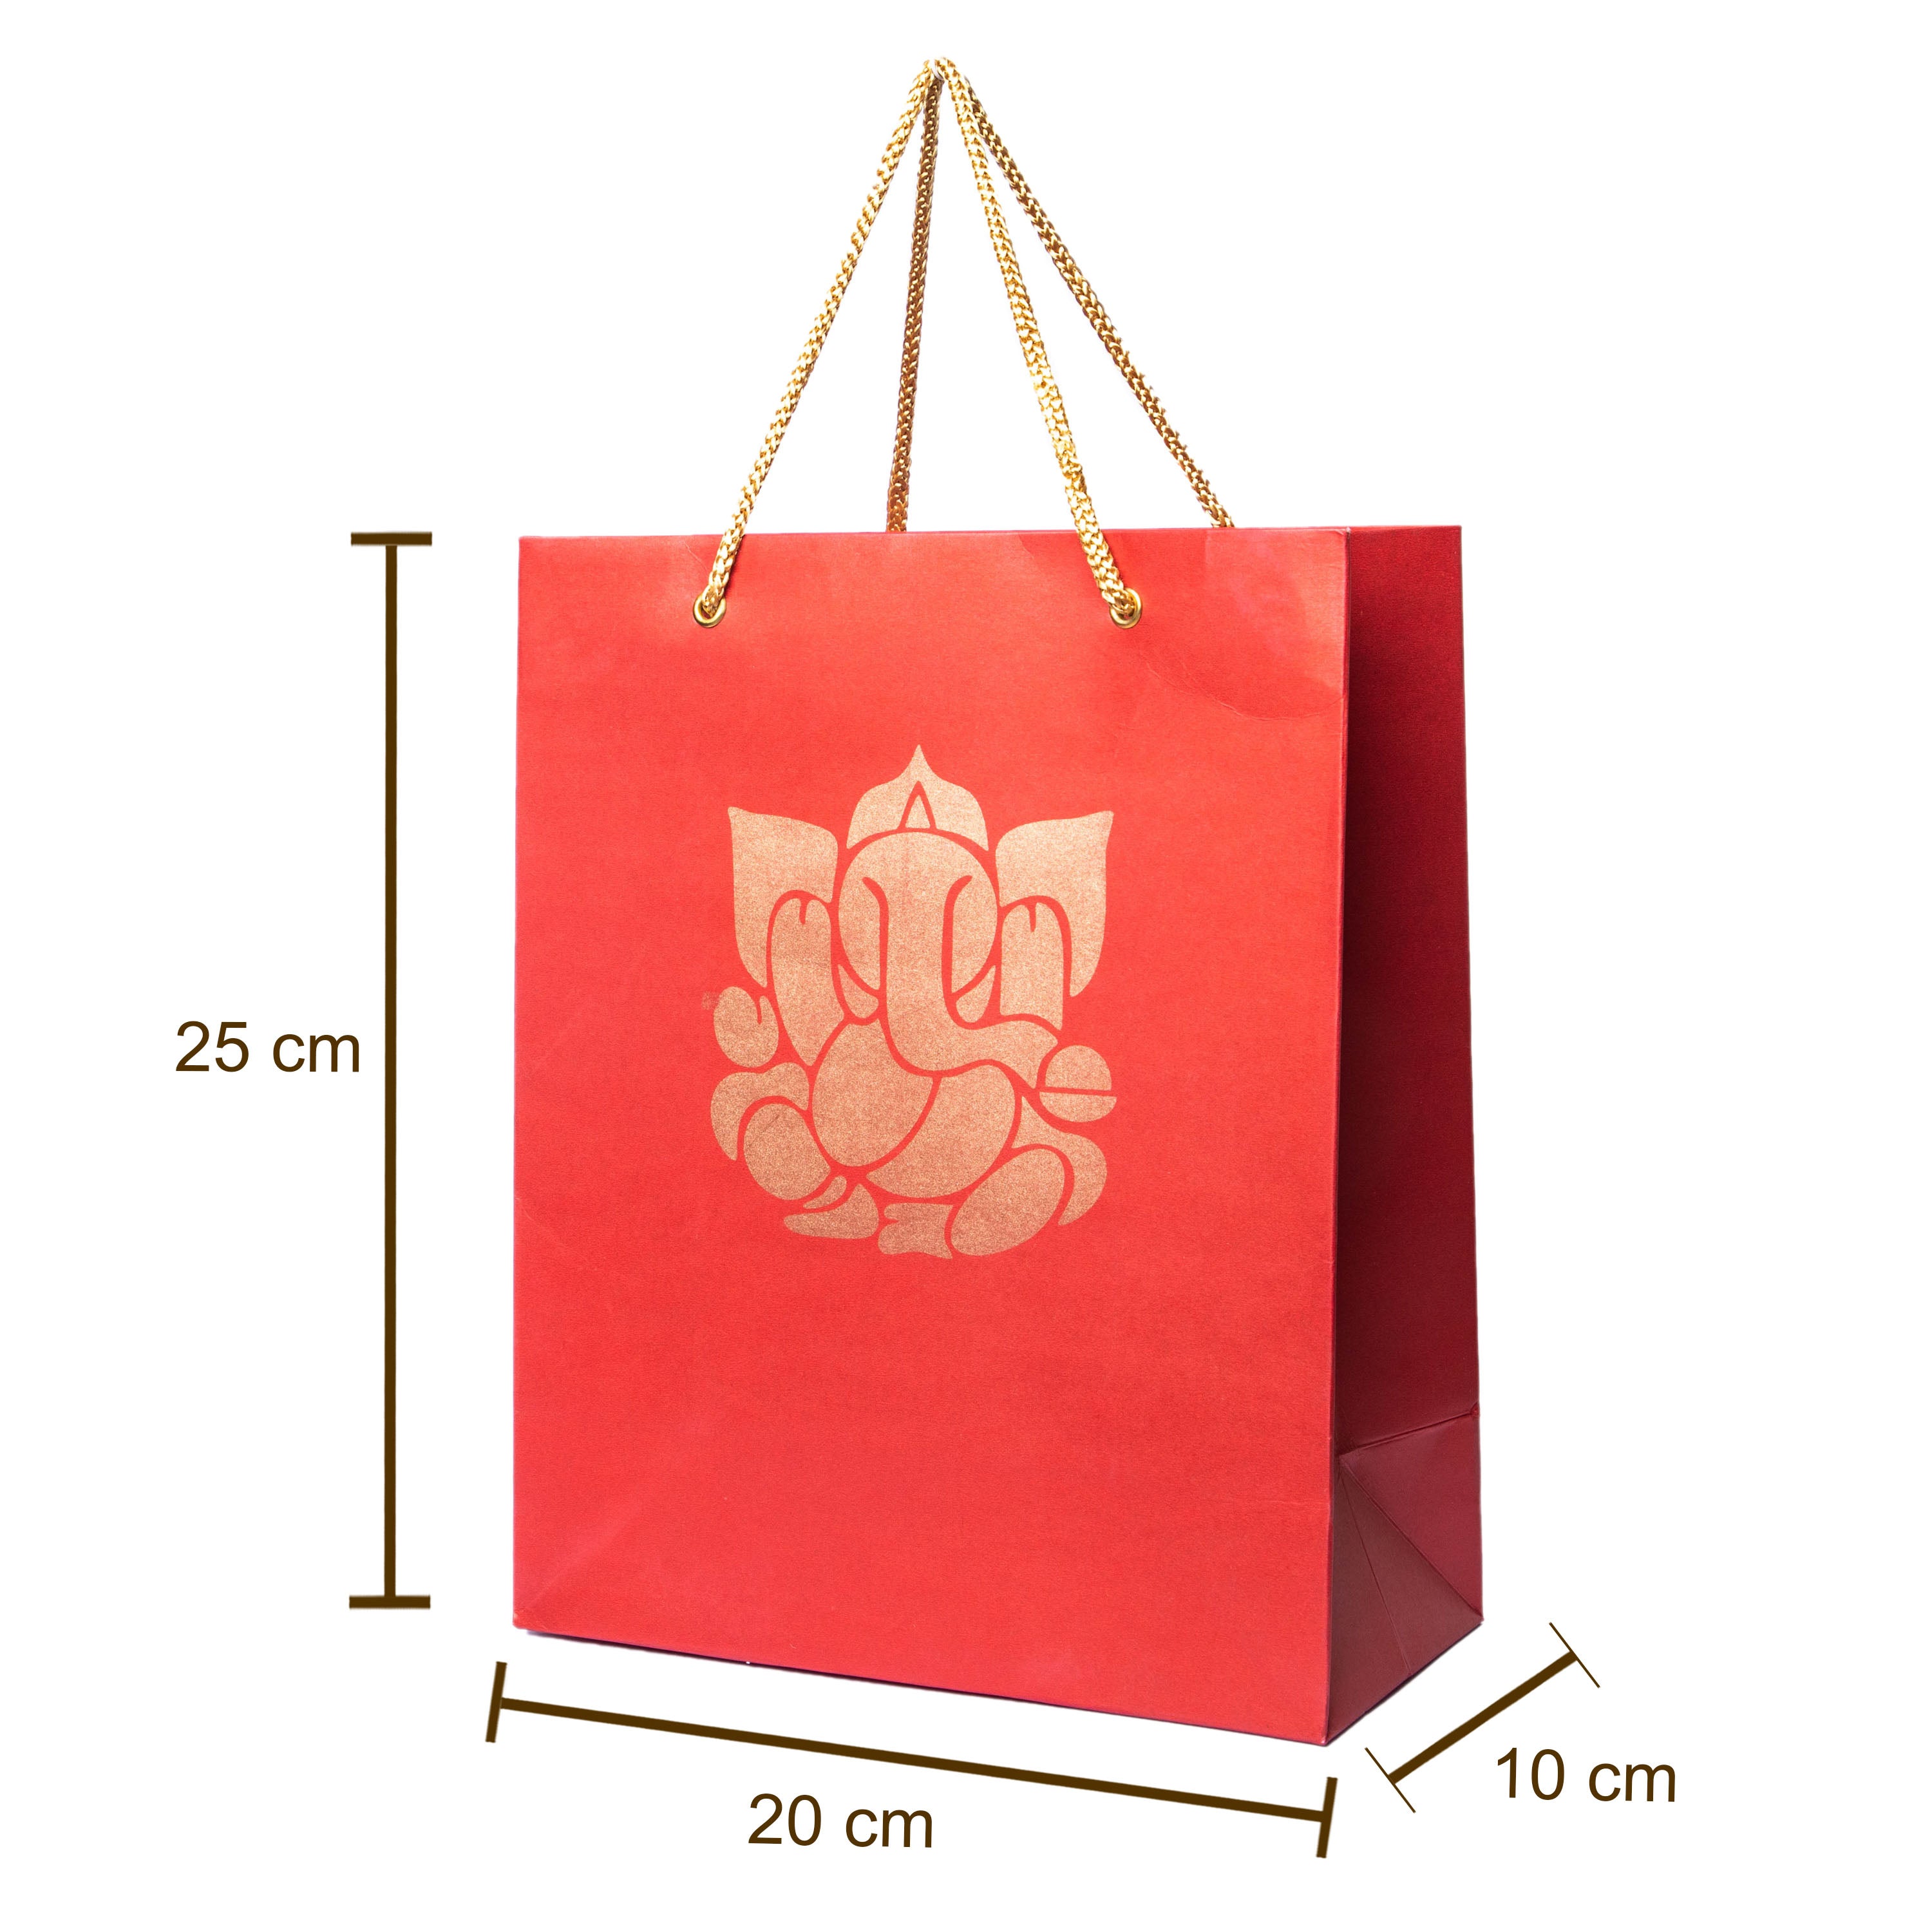 Traditional Gifting bags